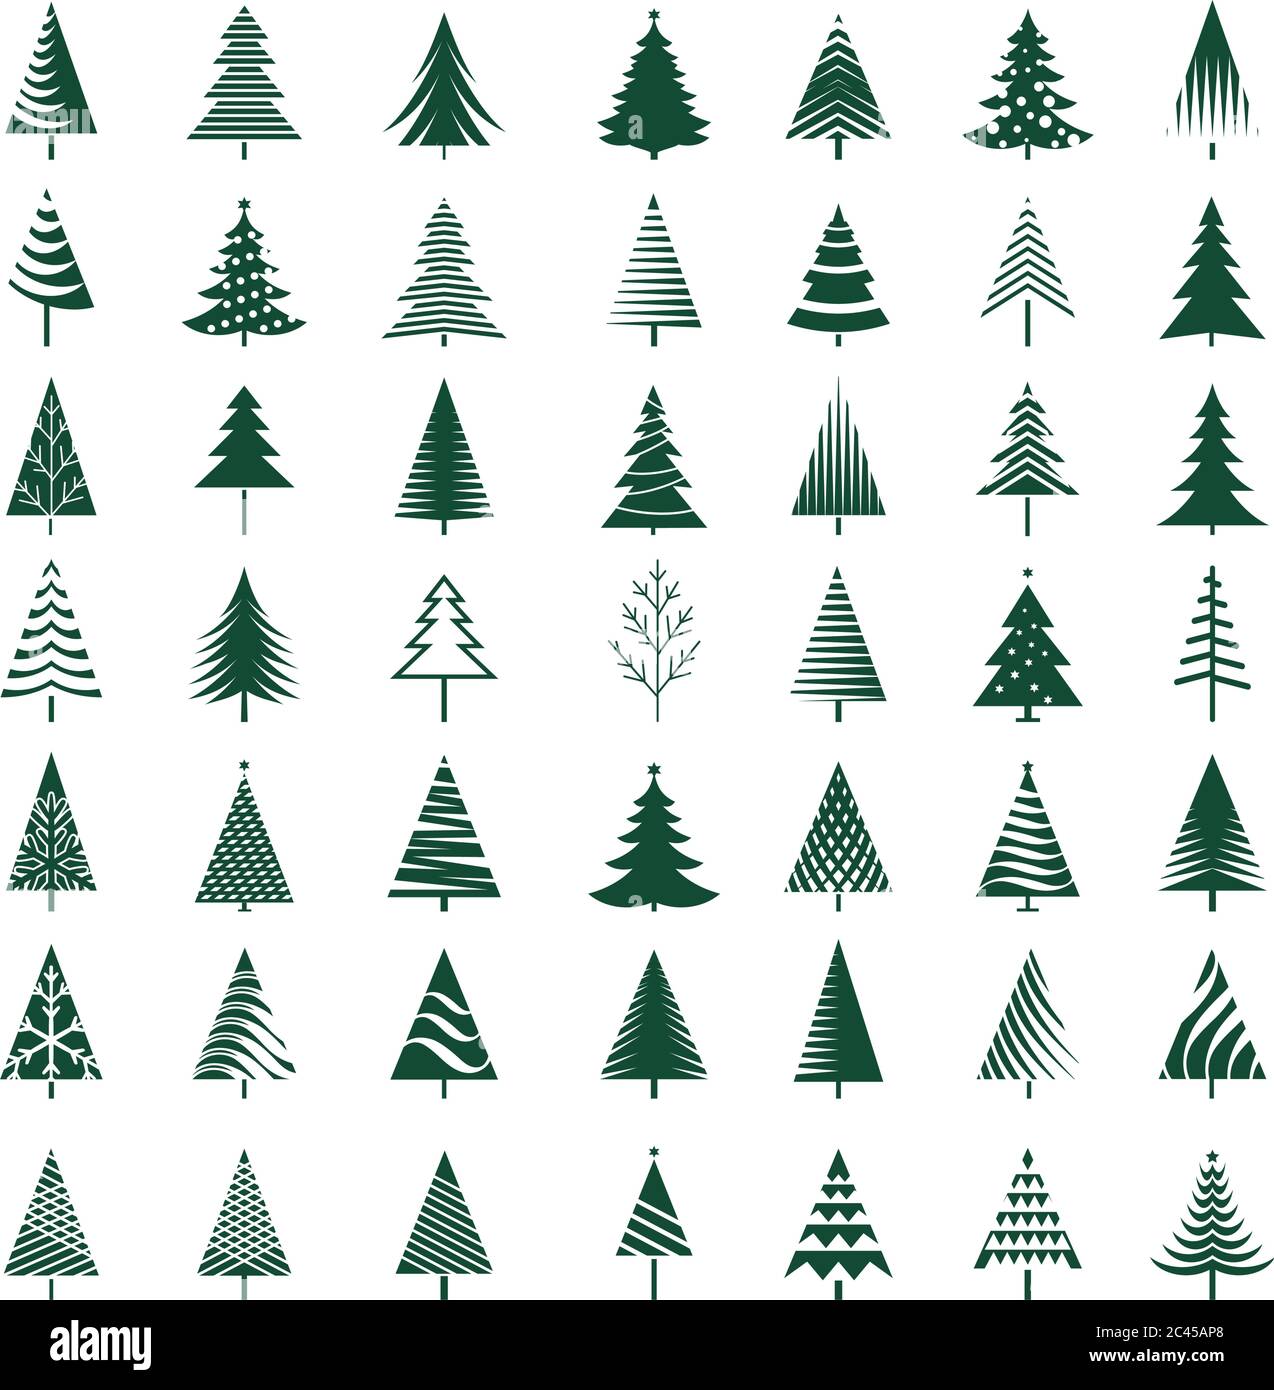 Symbol für grüne Winterbäume festlegen. Vektorgrafik. Stock Vektor